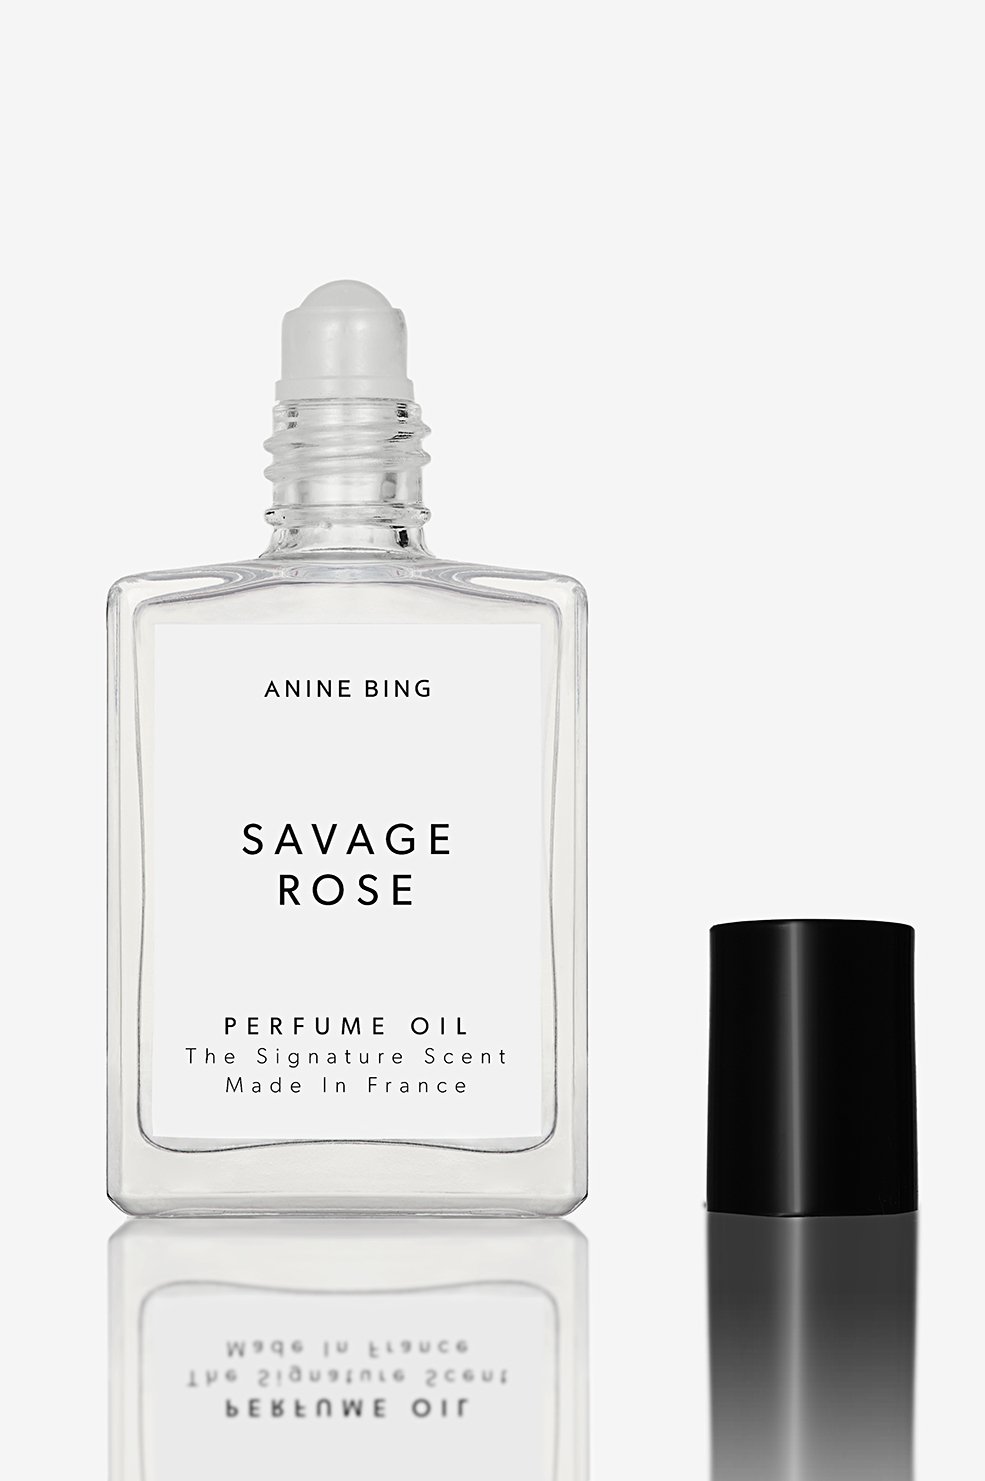 Anine Bing Savage Rose Perfume Oil4